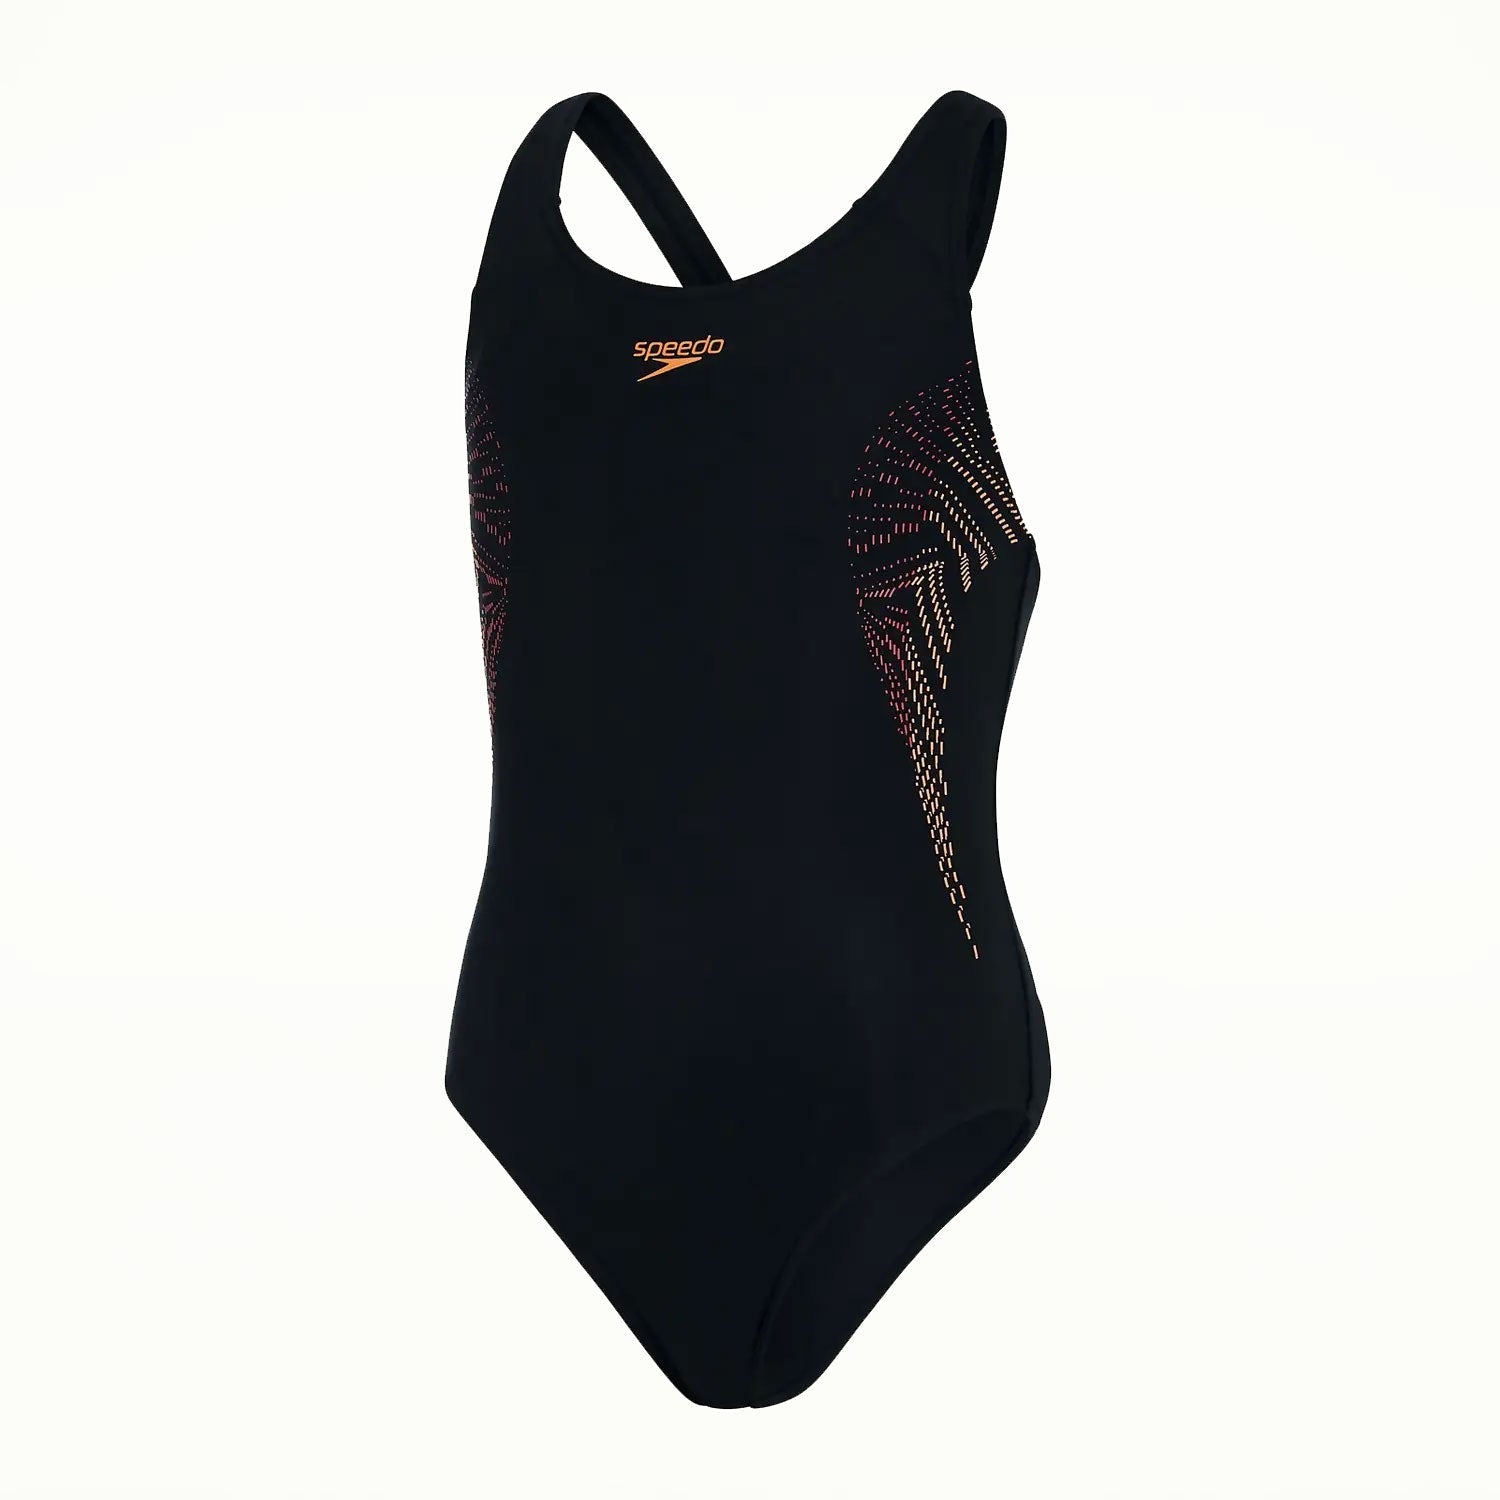 Speedo Plastisol Placement Muscleback Swimsuit - Girls - Black/Orange